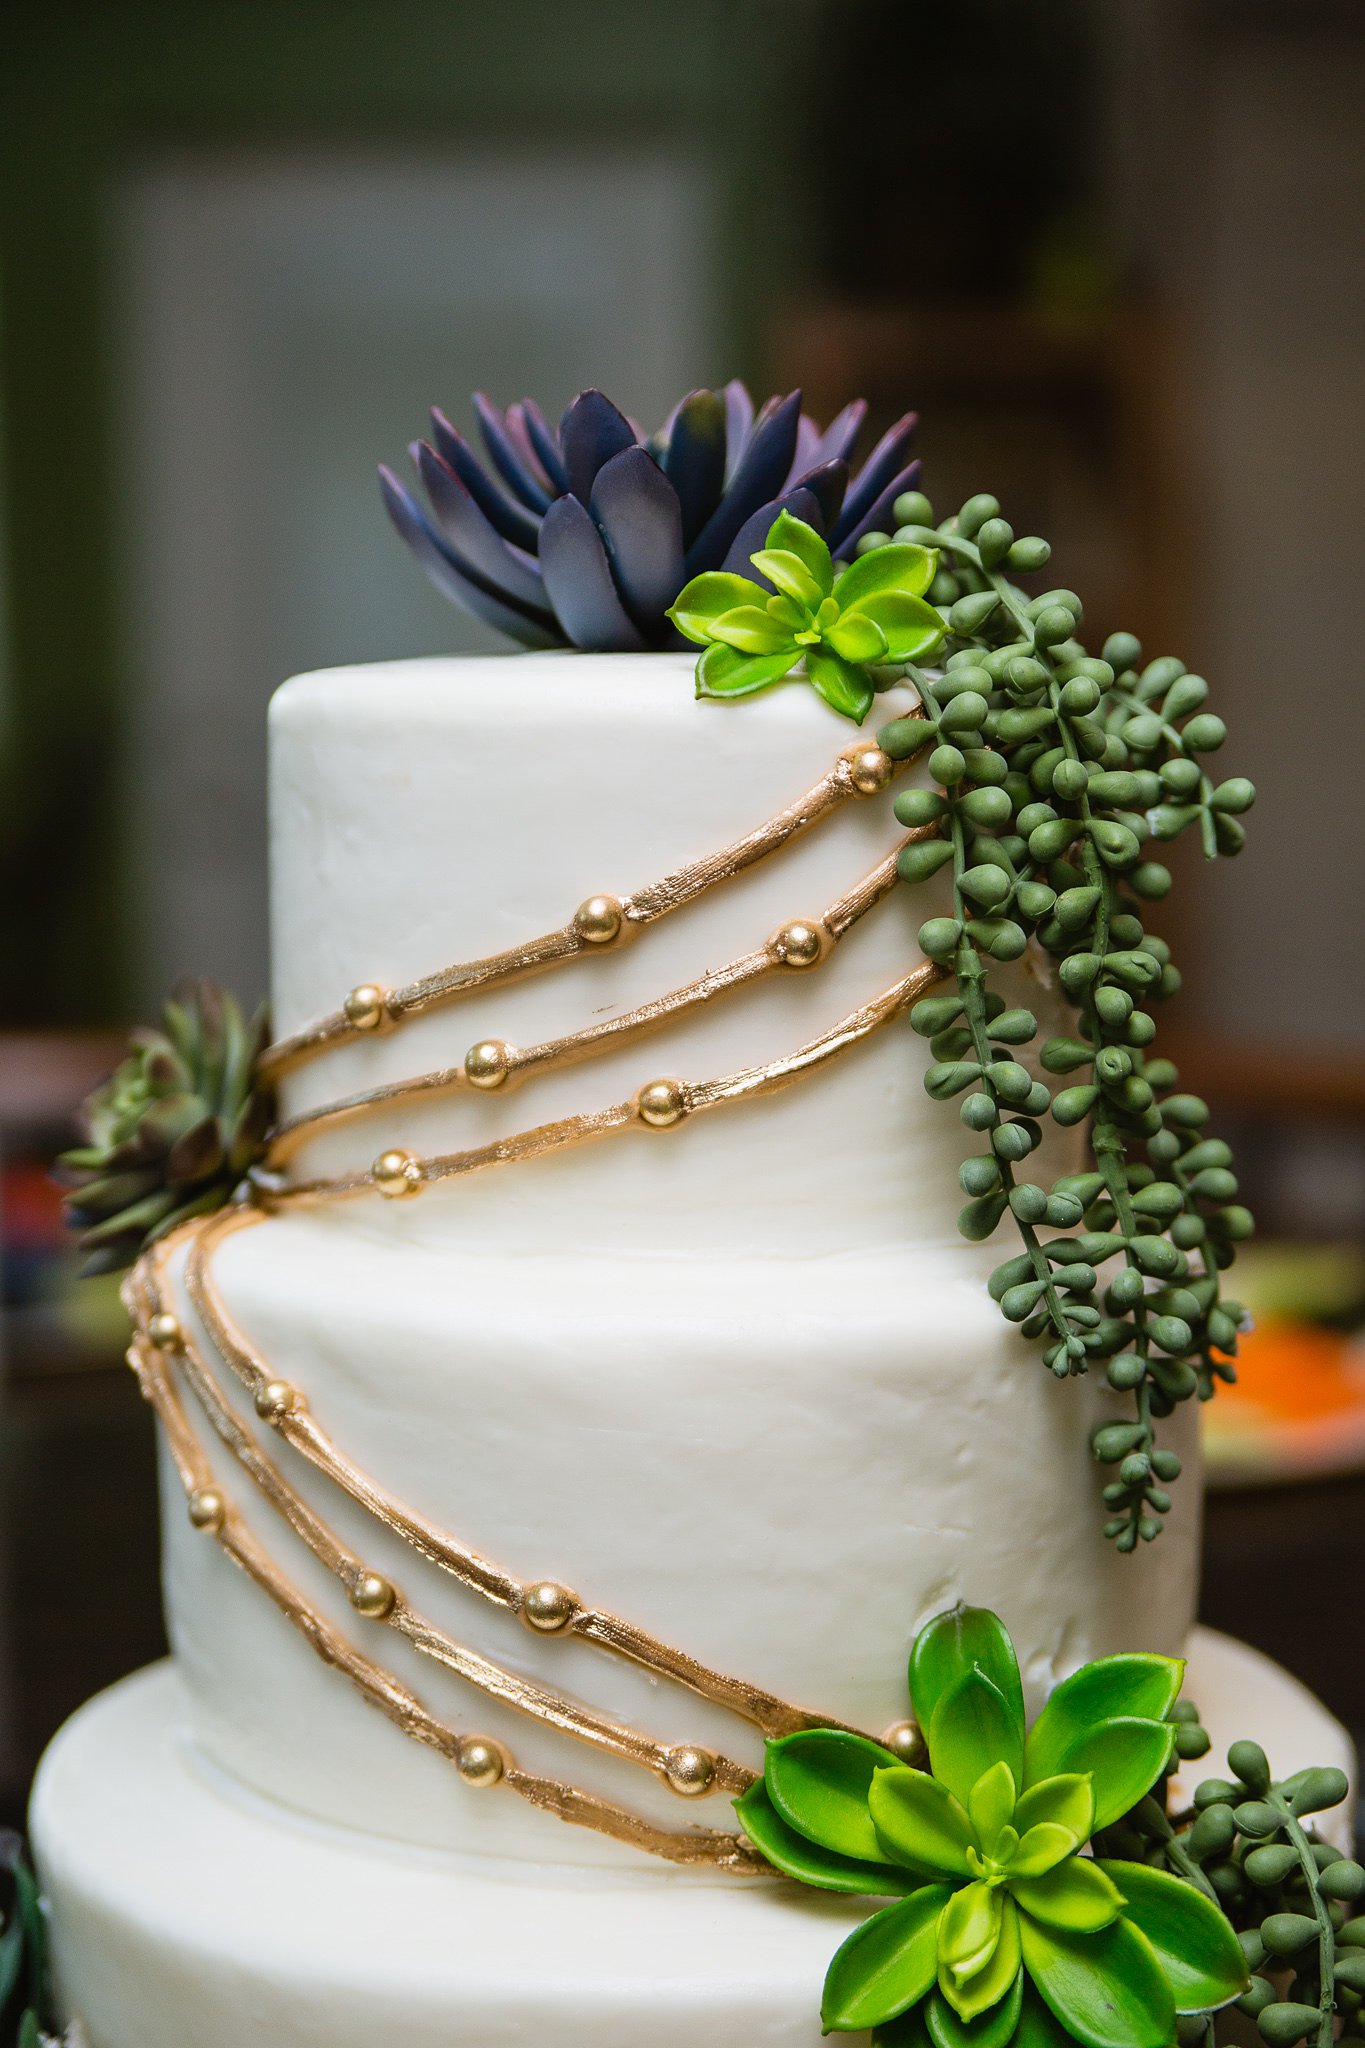 Succulent and gold decorated boho inspired wedding cake by wedding photographer PMA Photography.